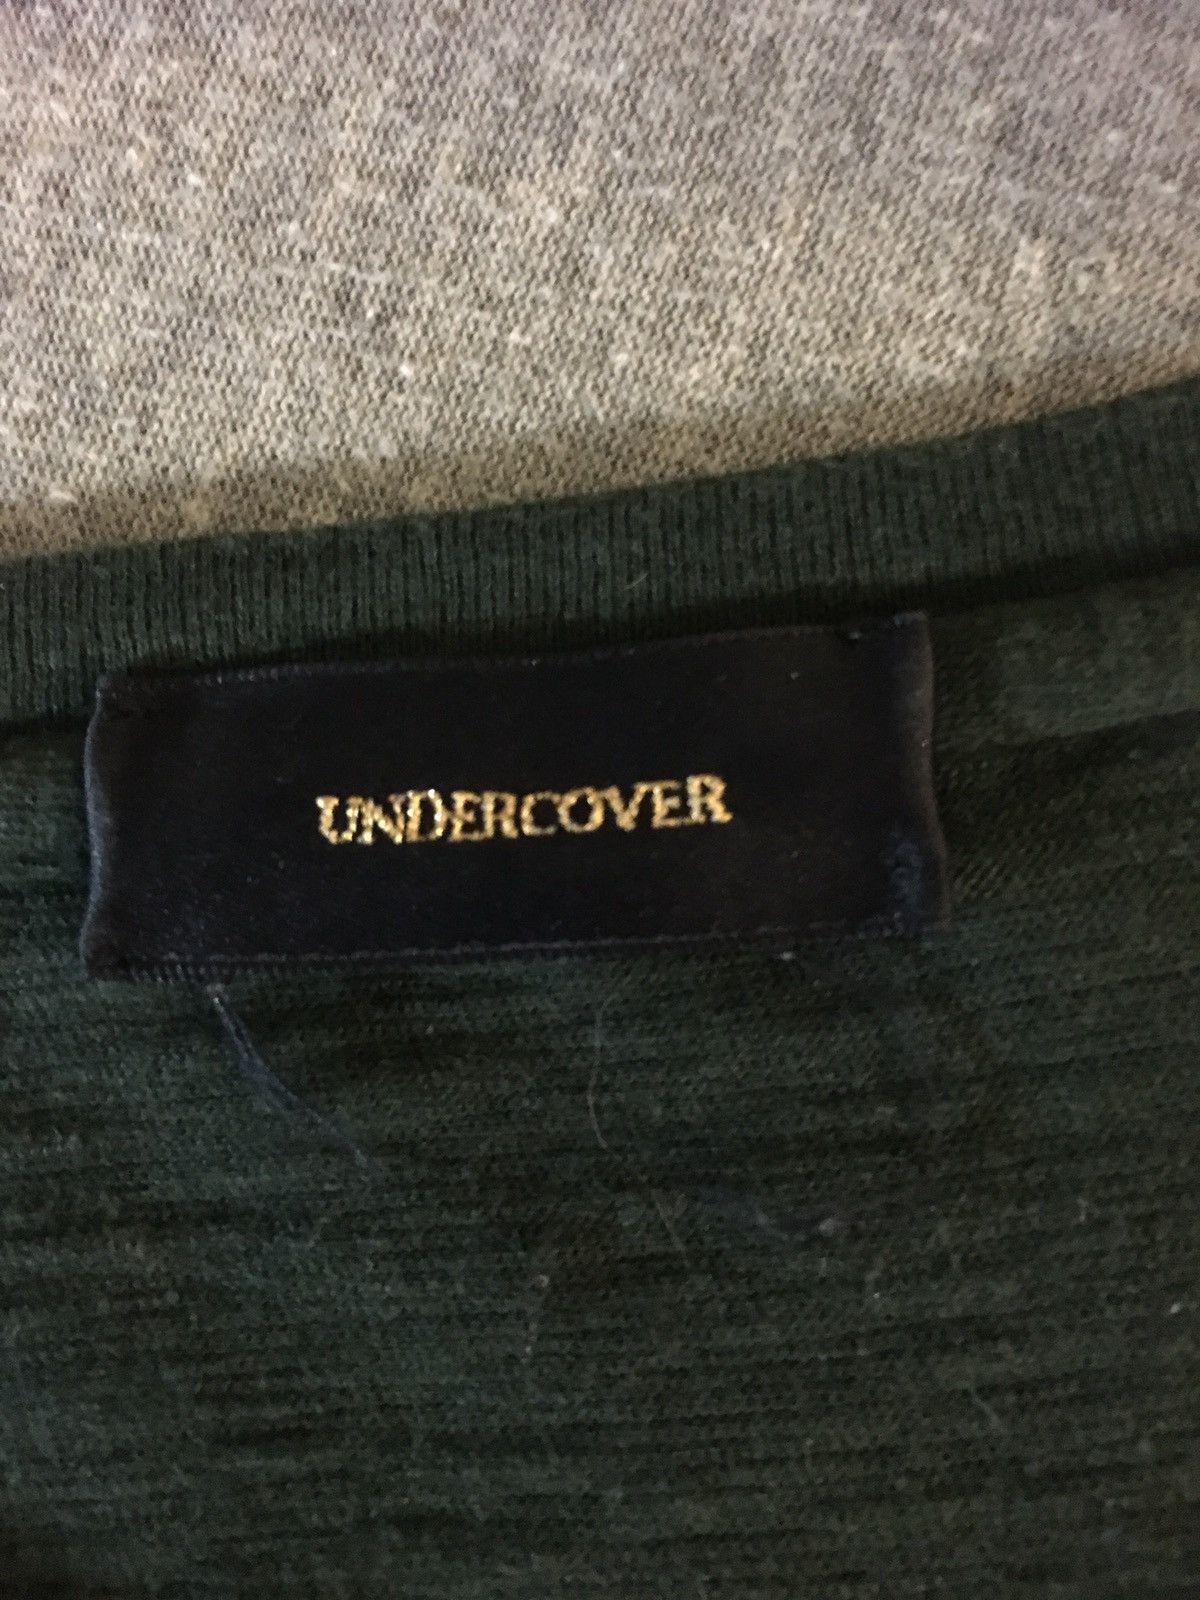 Undercover Creepy Lil Ass Girl Shirt Size US L / EU 52-54 / 3 - 4 Thumbnail